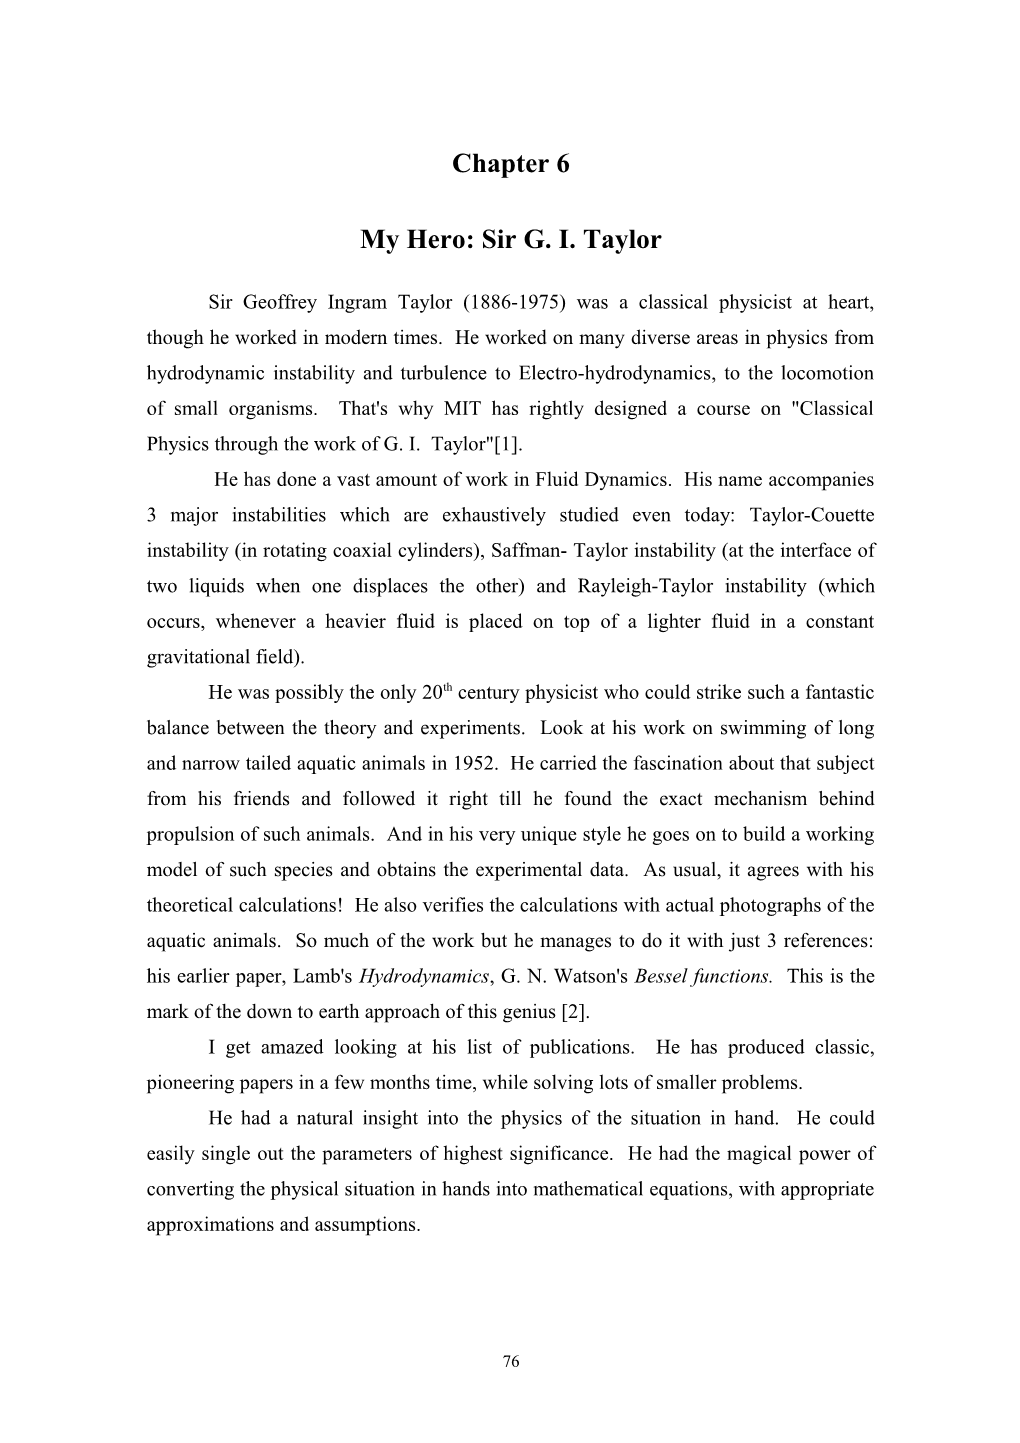 My Hero: Sir G. I. Taylor